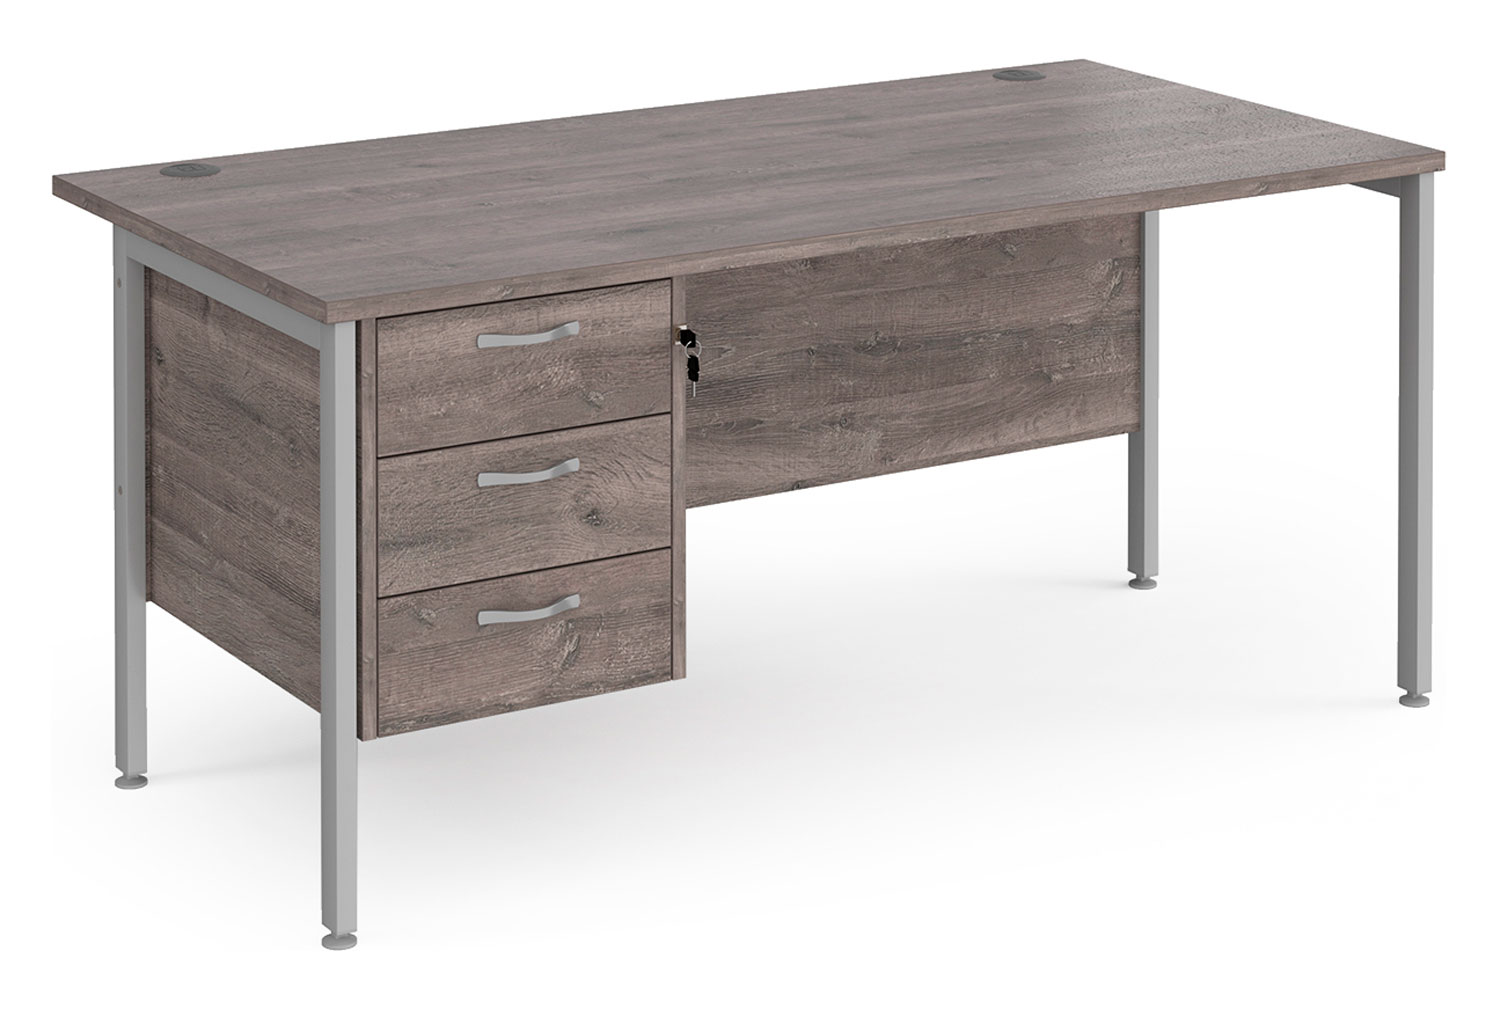 Value Line Deluxe H-Leg Rectangular Office Desk 3 Drawers (Silver Legs), 160wx80dx73h (cm), Grey Oak